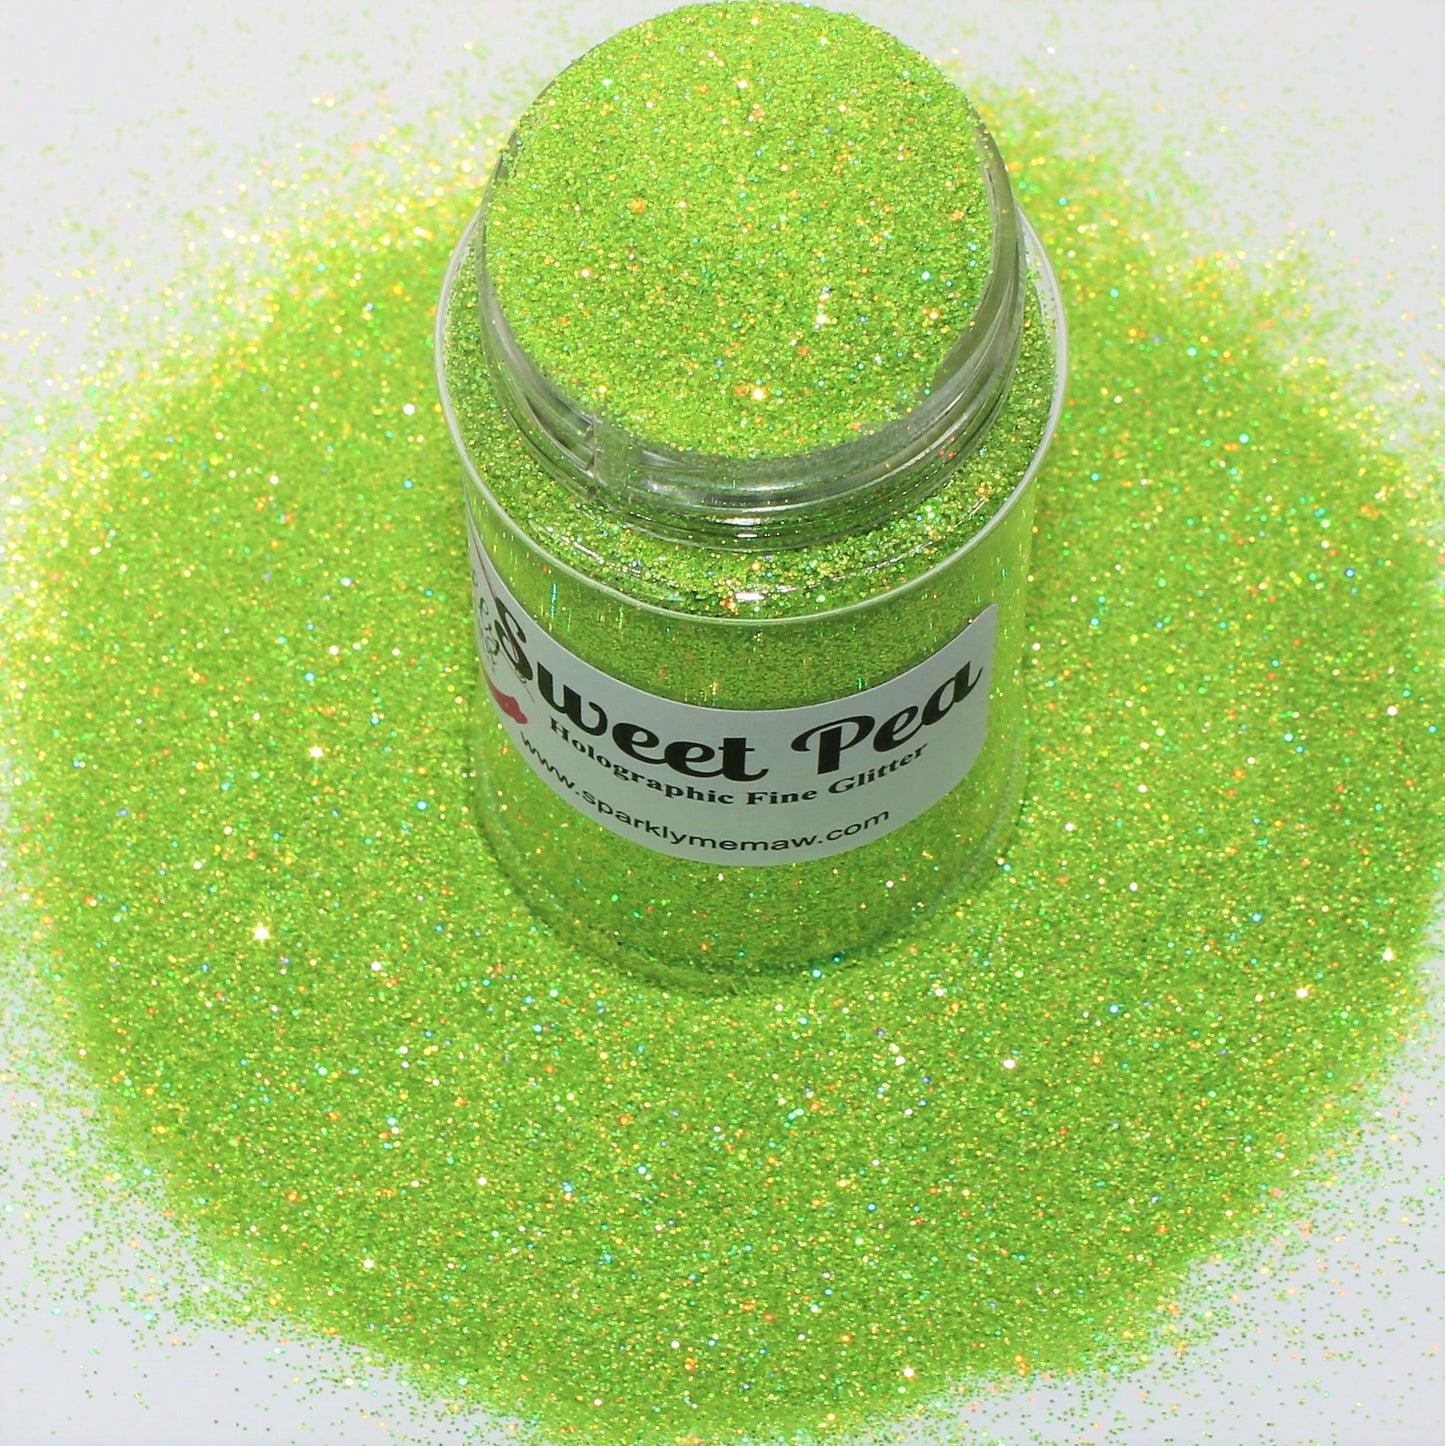 Sweet Pea Holographic Fine Glitter